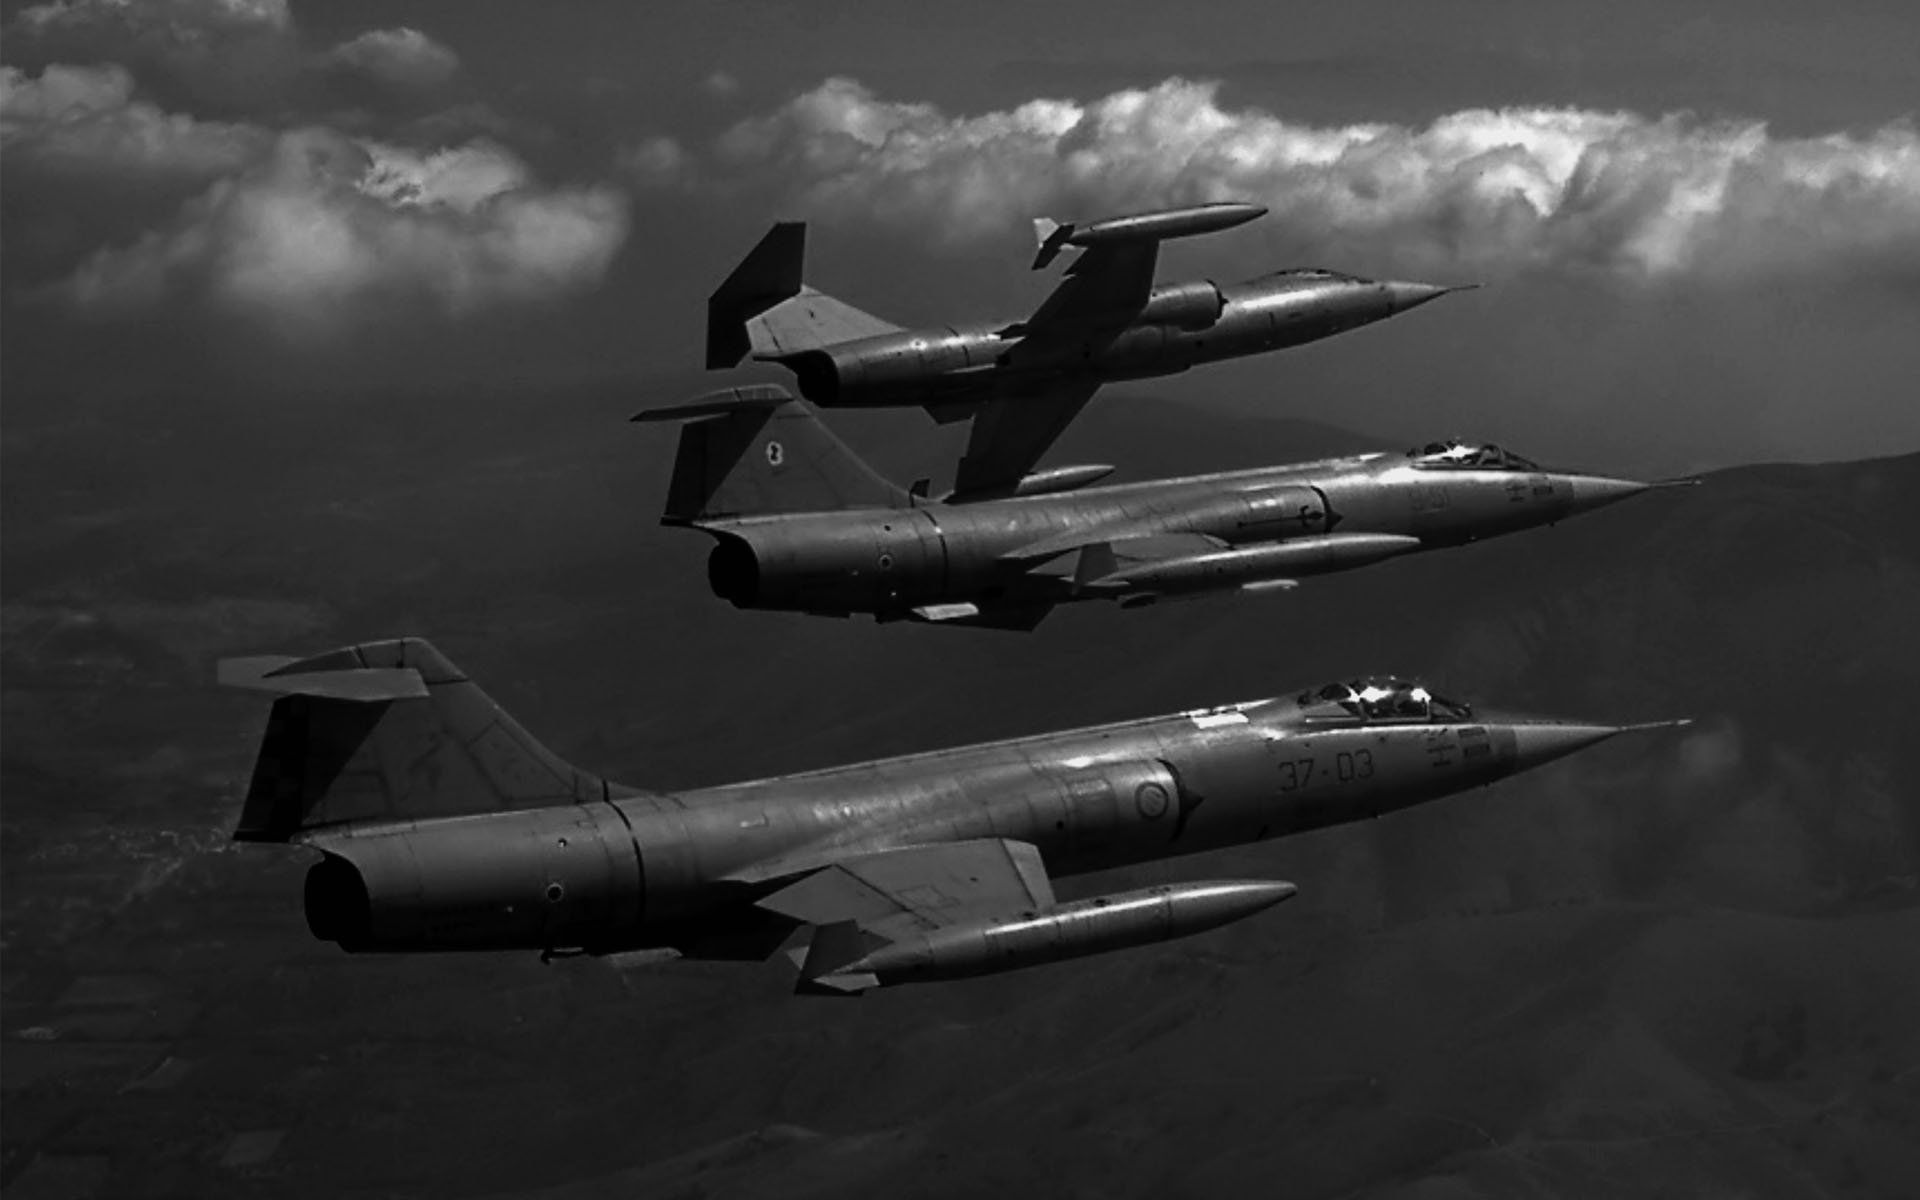 Lockheed F104 Starfighter Fighter Bomber - HD Wallpapers